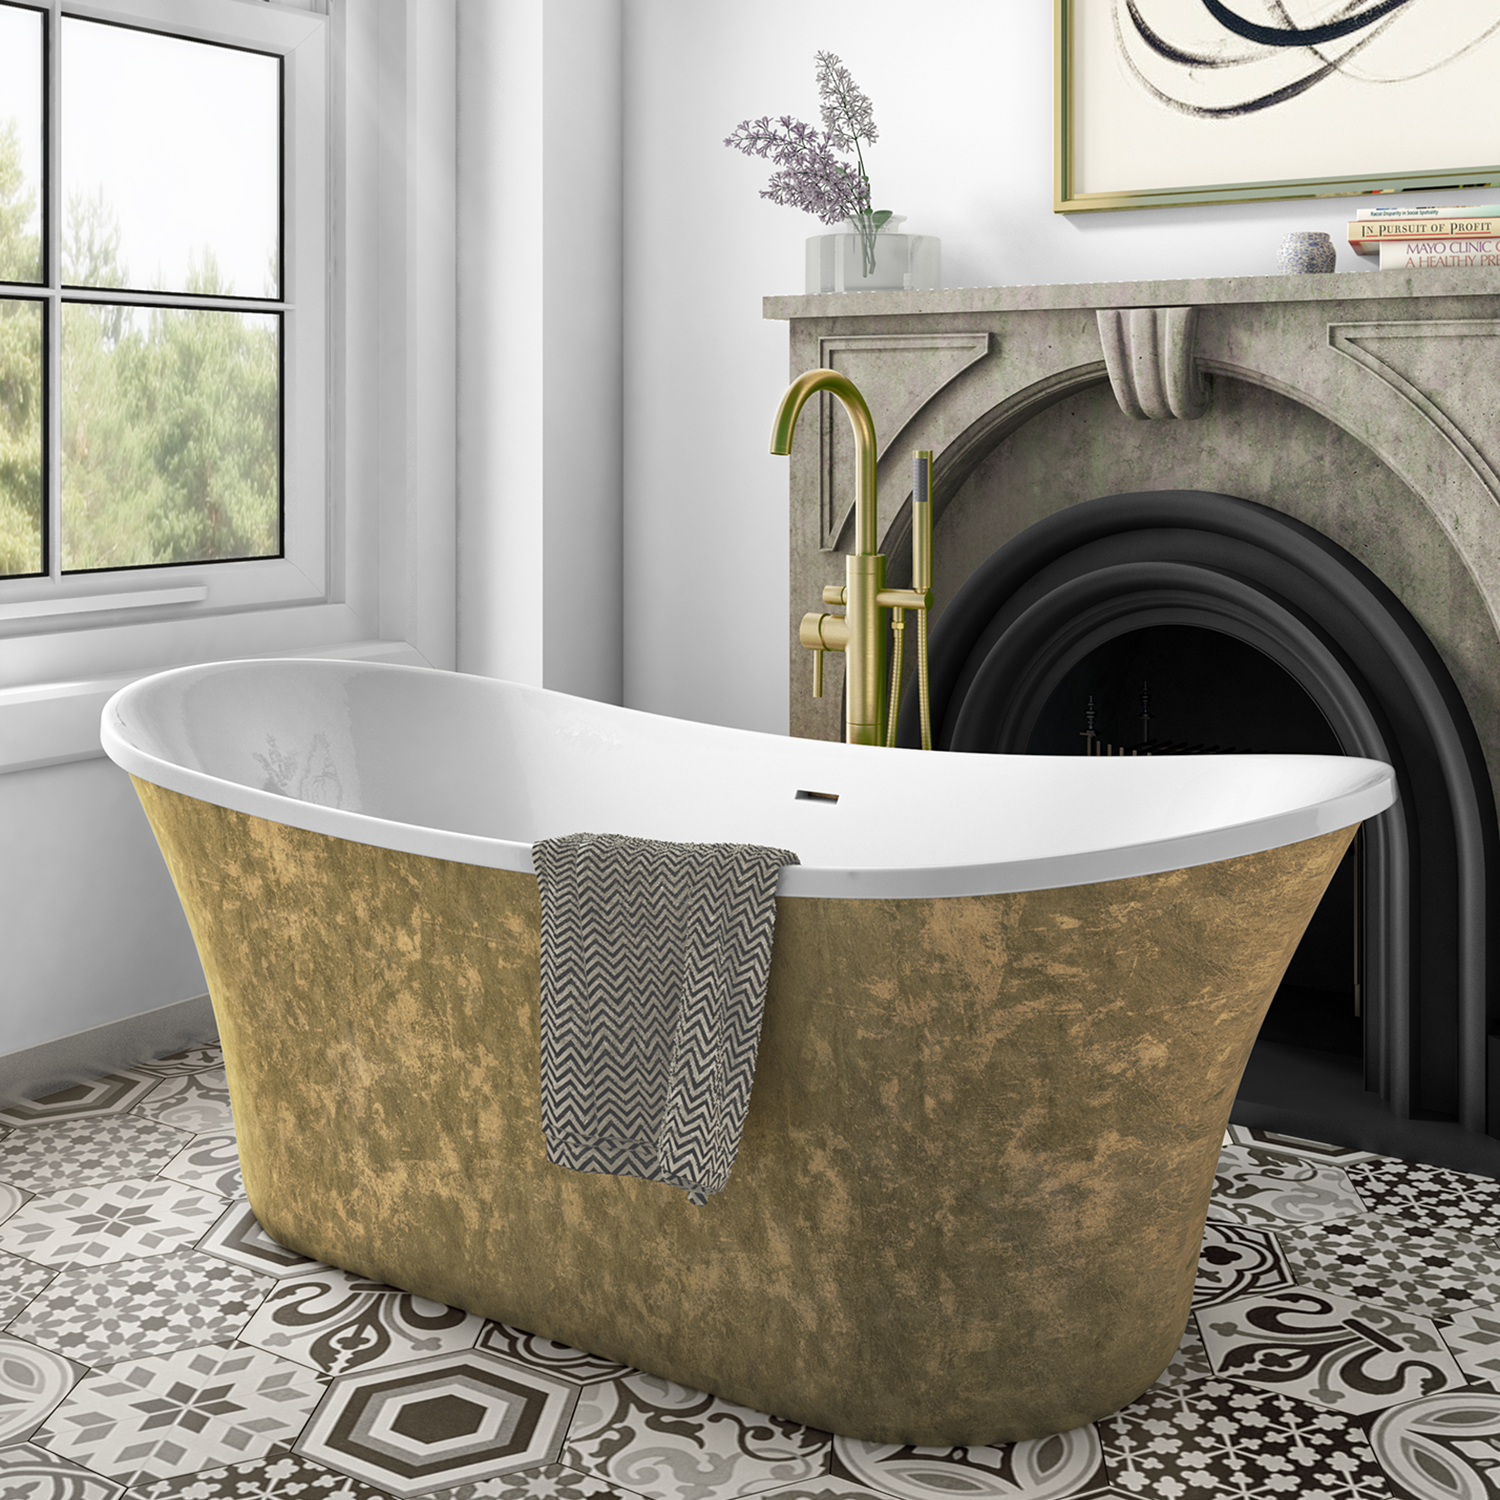 Slipper　1705　Gold　Better　x　Elementa　755mm　Freestanding　Double　Bath　Ended　Bathrooms